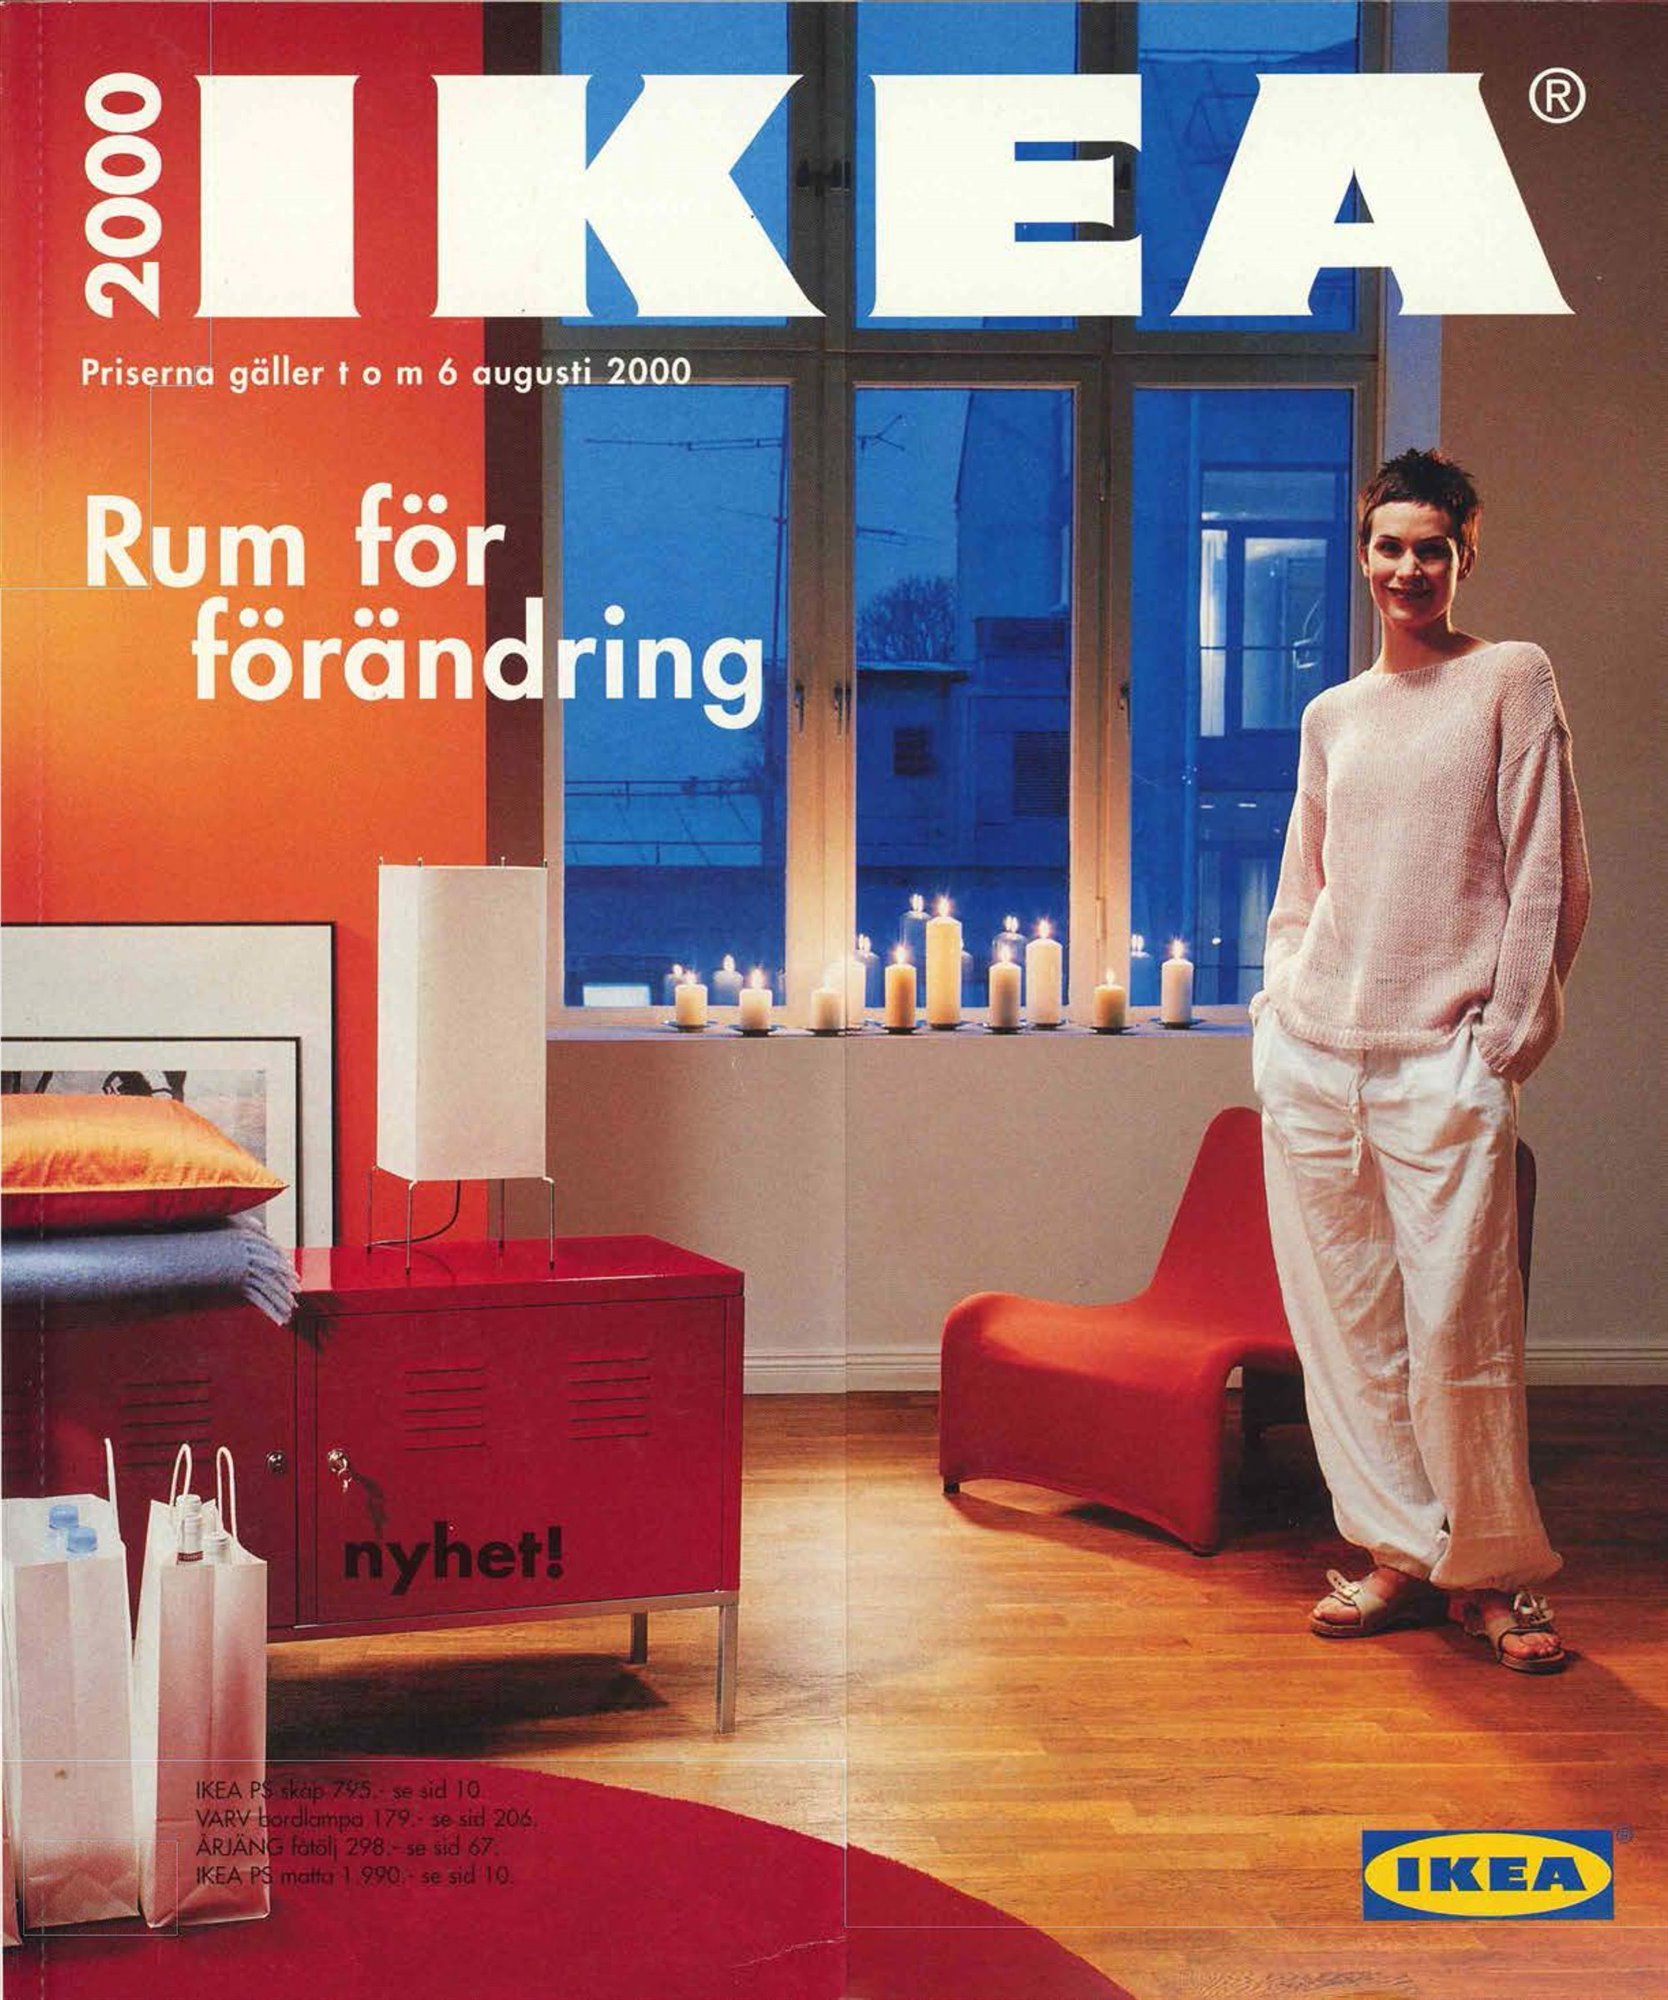 Portada catalogo de Ikea 2000